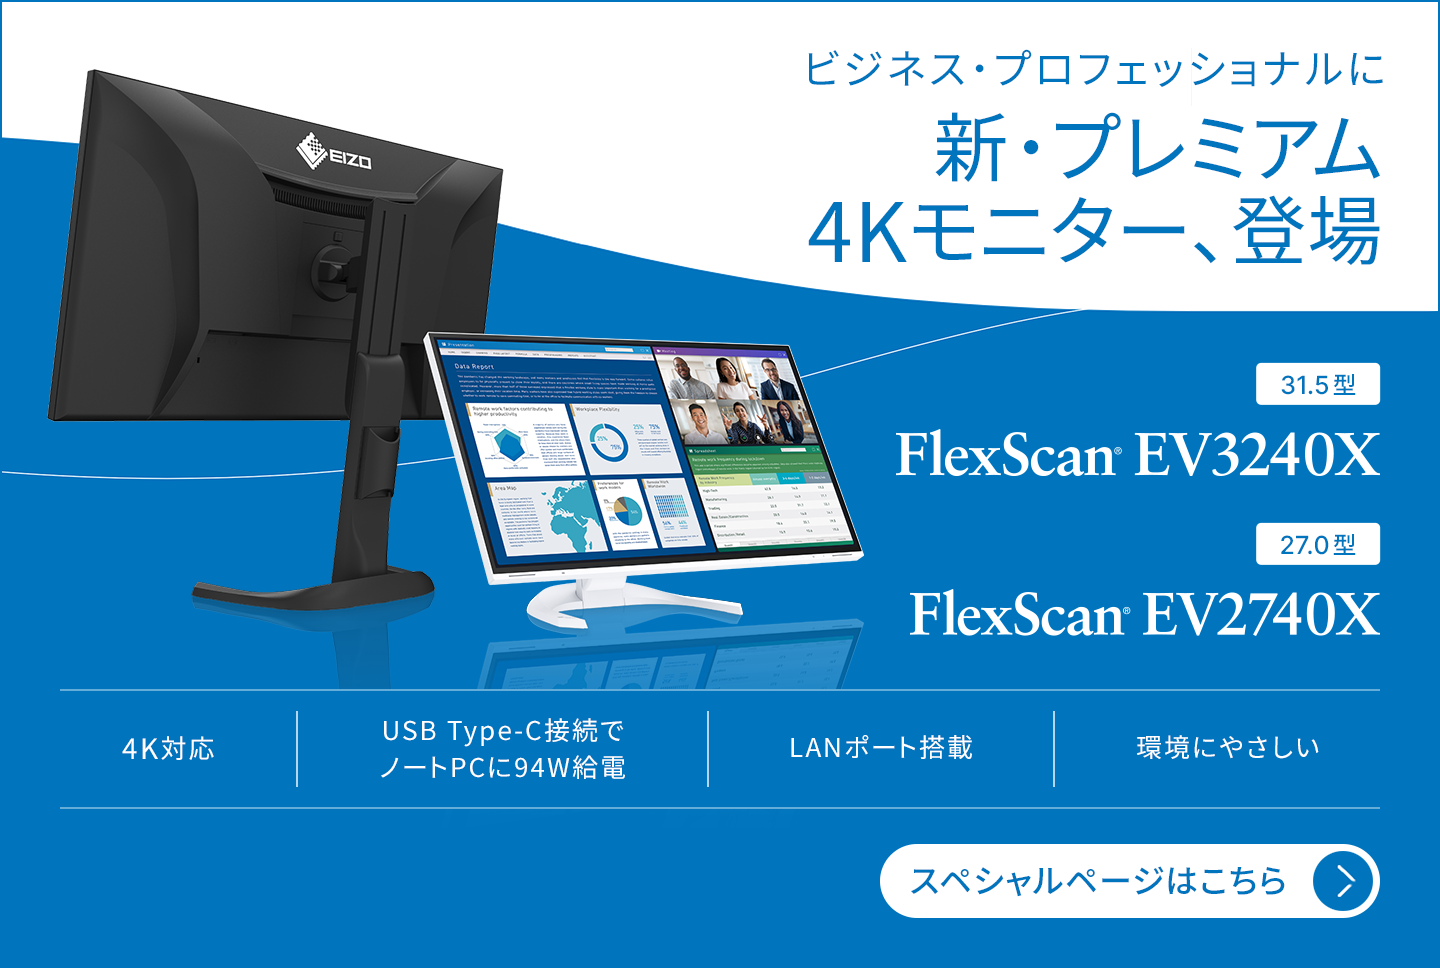 EIZO 31.5型 Flex Scan 液晶ディスプレイ(ホワイト) プレミアム4Kモニター EV3240X-WT 15倍P 